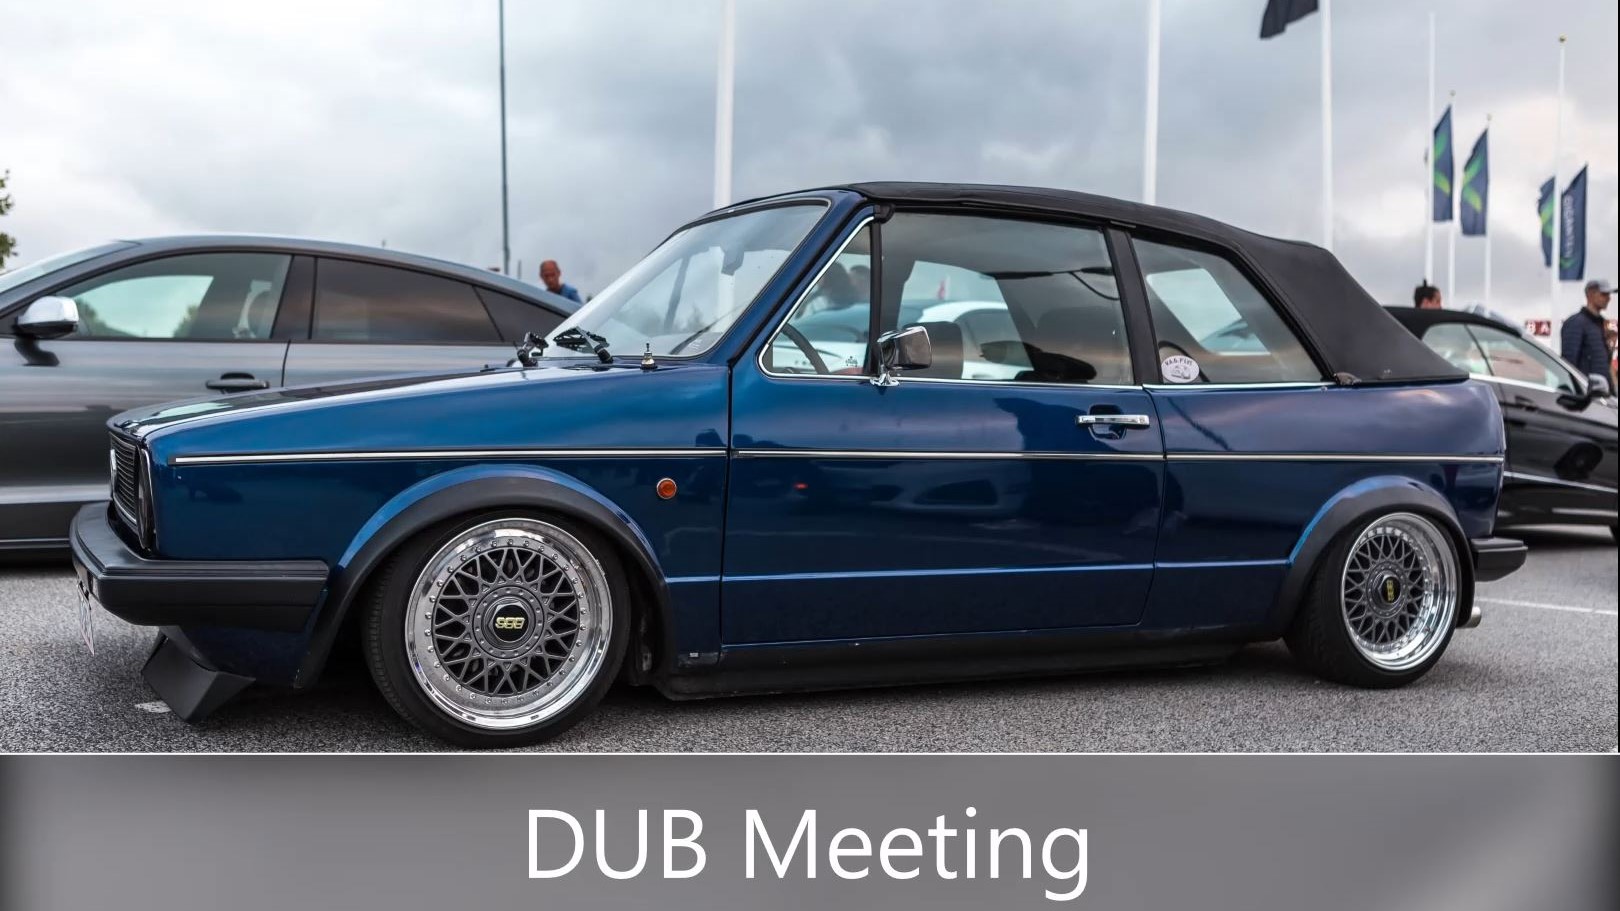 DUB Meeting - Racelens